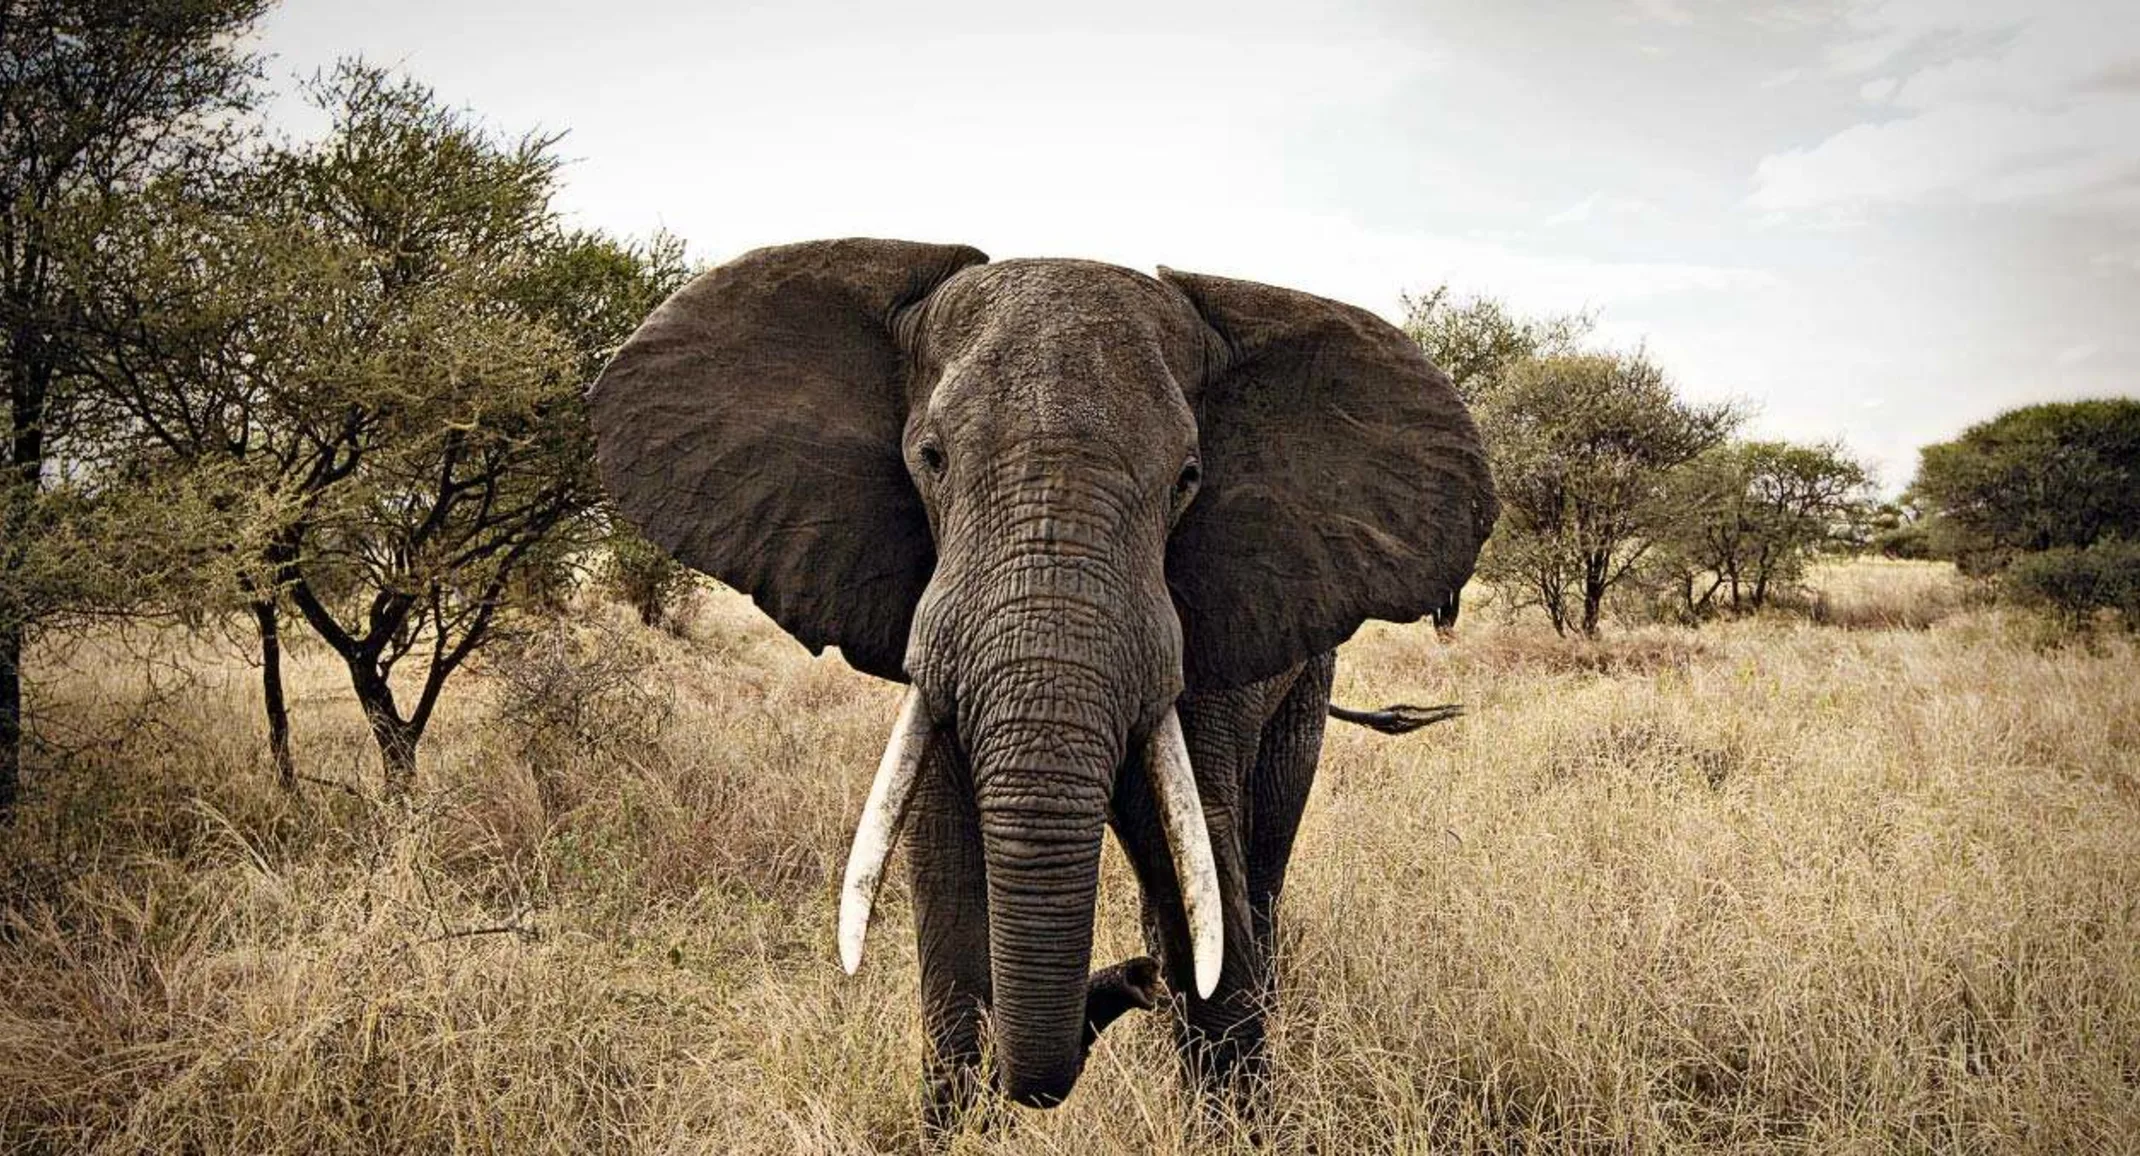 Elephant facing forward in their natural habitat